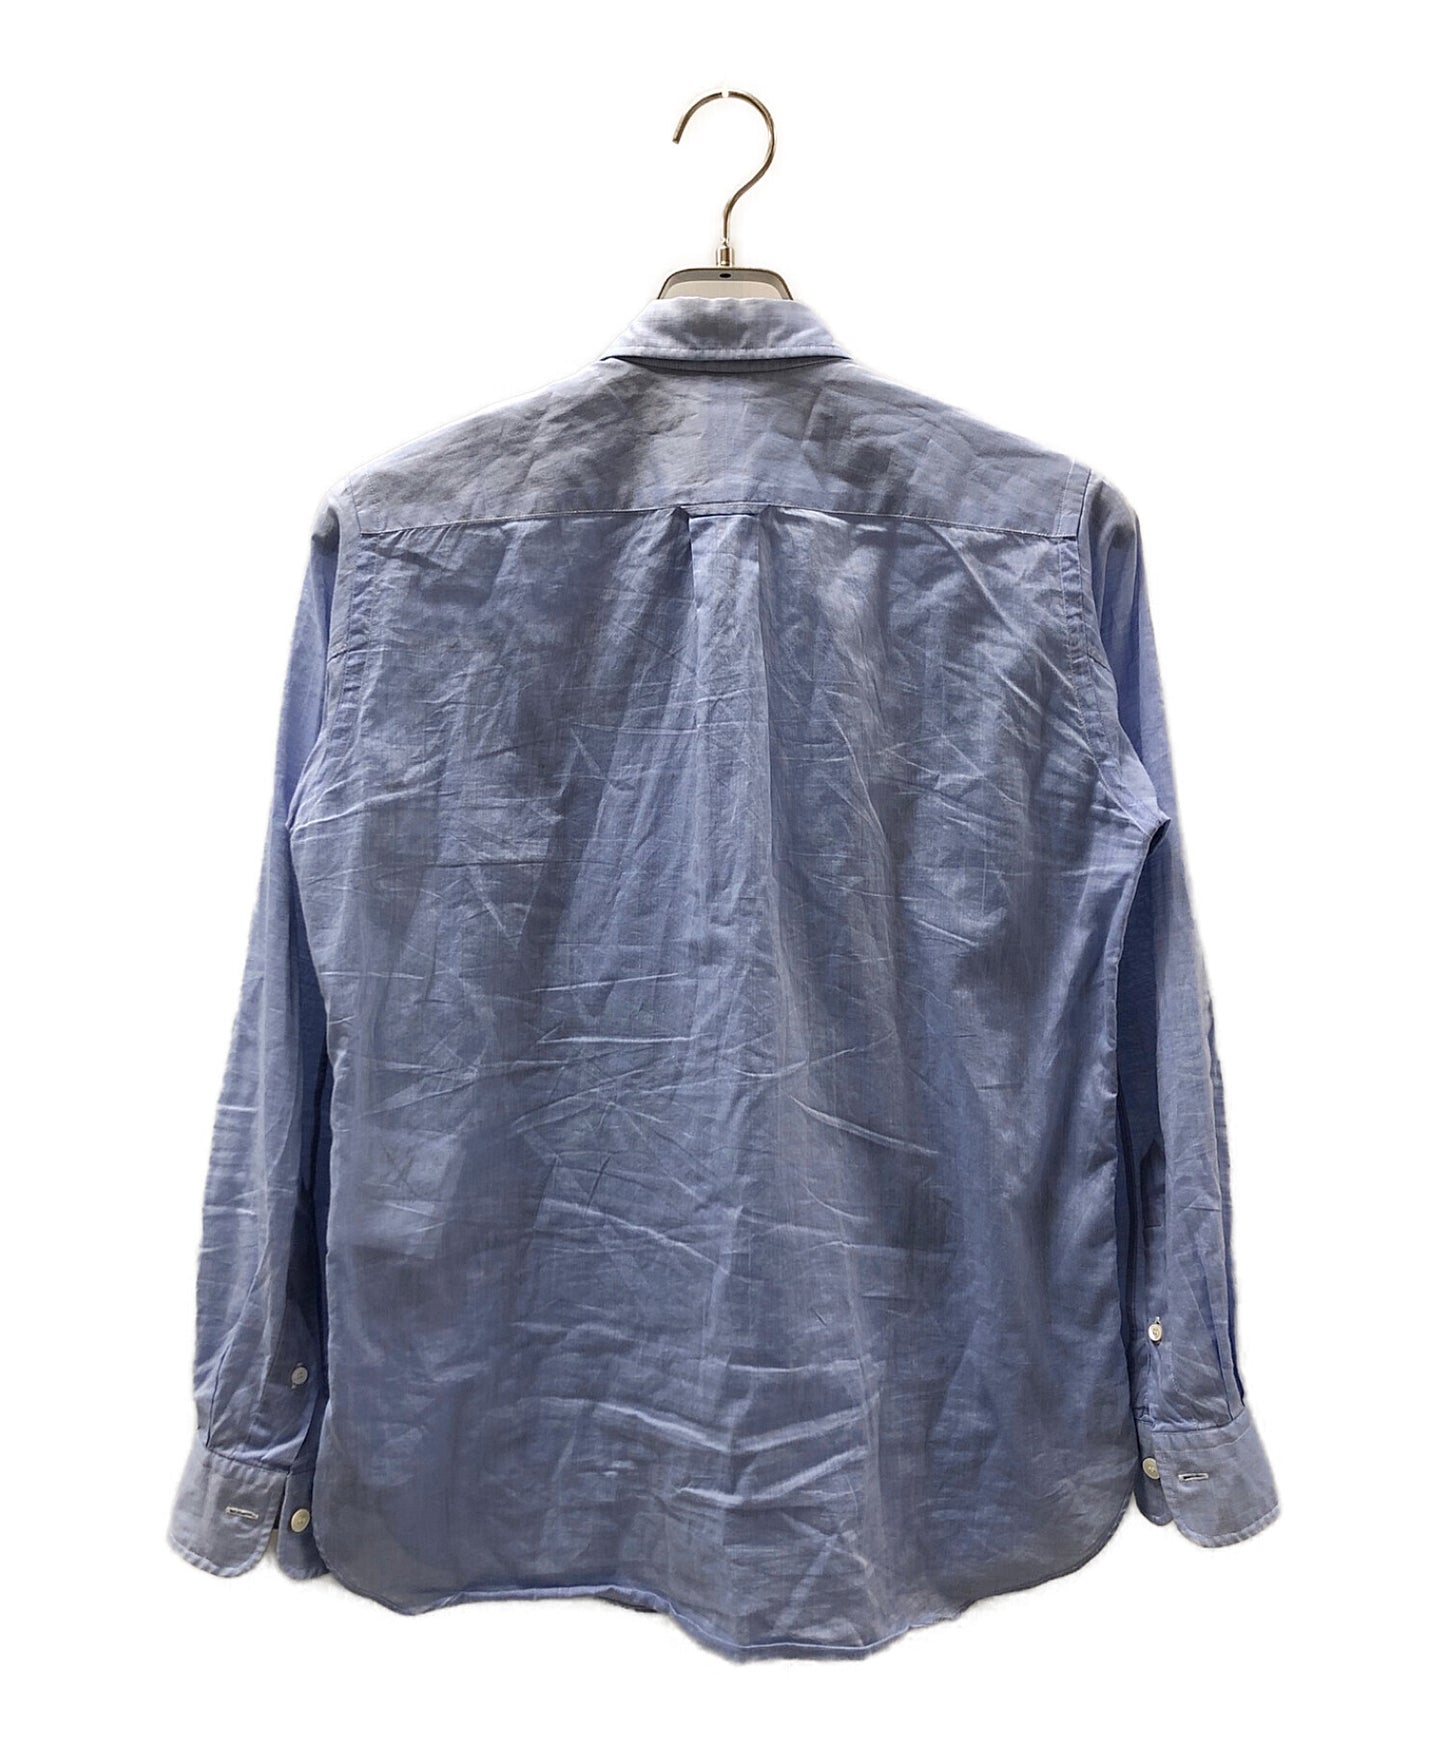 COMME des GARCONS JUNYA WATANABE MAN Patchwork Shirts/Long Sleeve Shirts WQ-B011